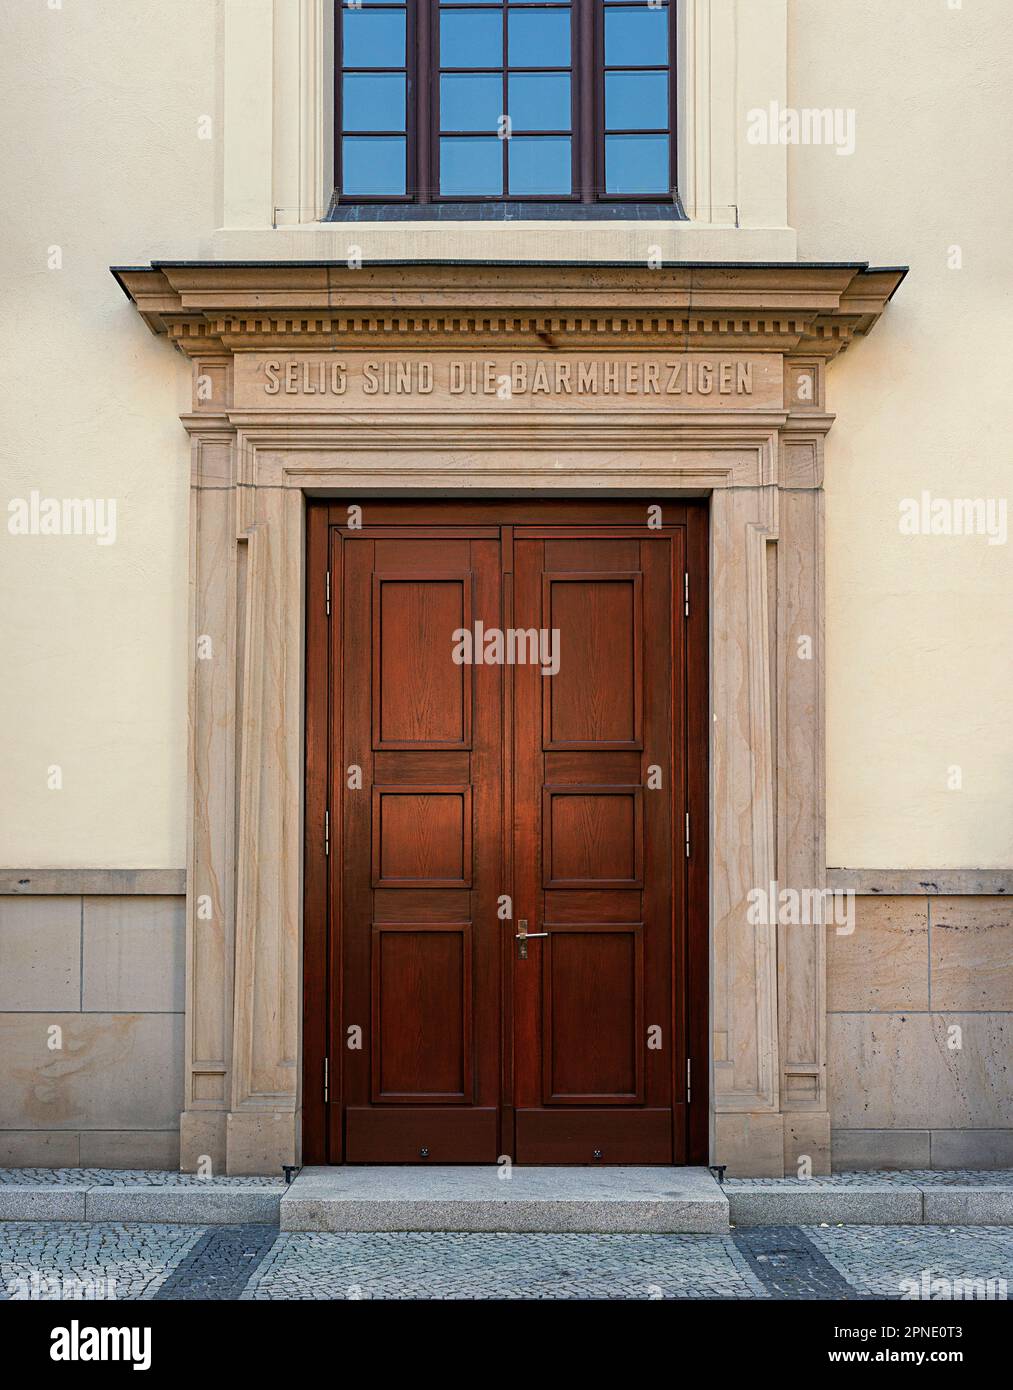 Side Entrances At The German Cathedral, Gendarmenmarkt, Berlin, Germany Stock Photo